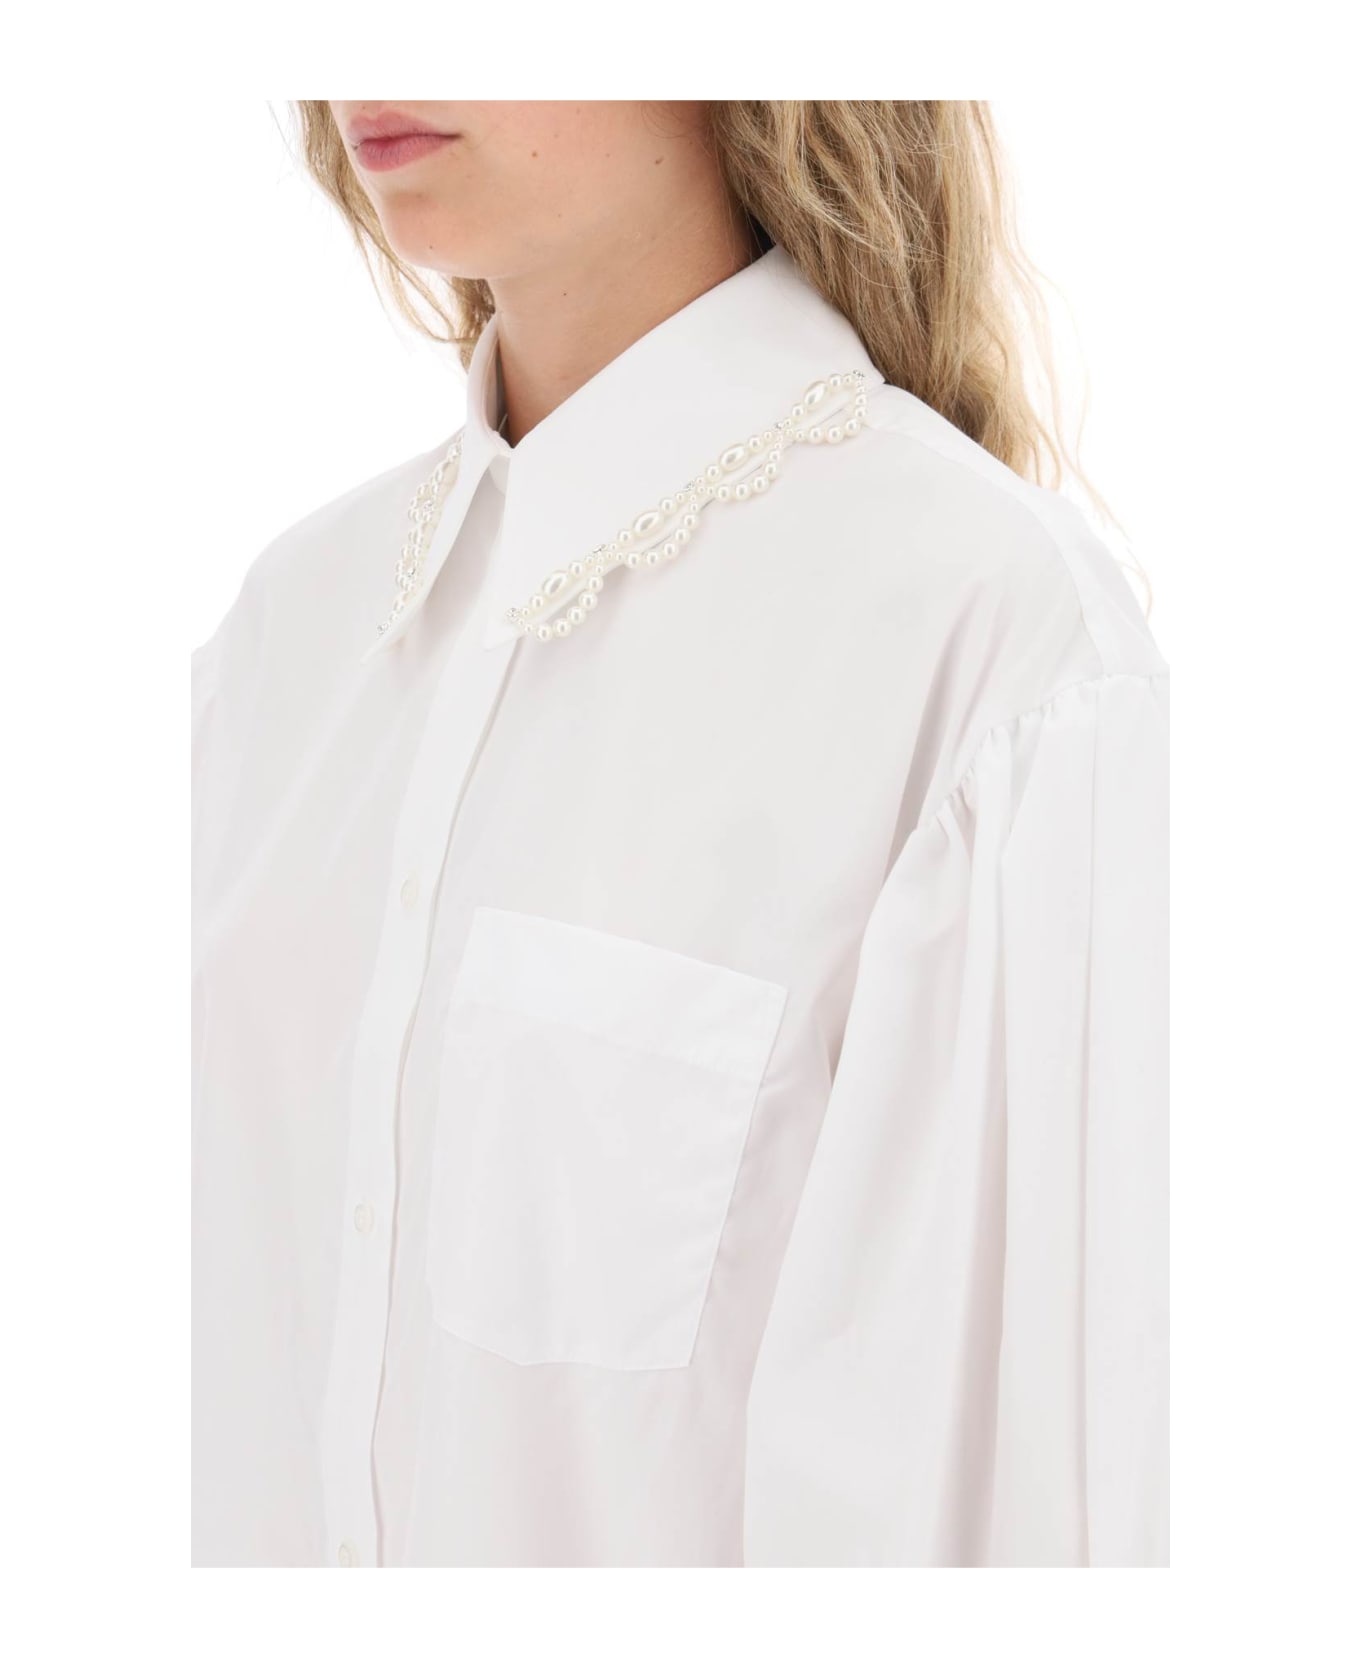 Simone Rocha Puff Sleeve Shirt With Embellishment - WHITE PEARL CLEAR (White) シャツ